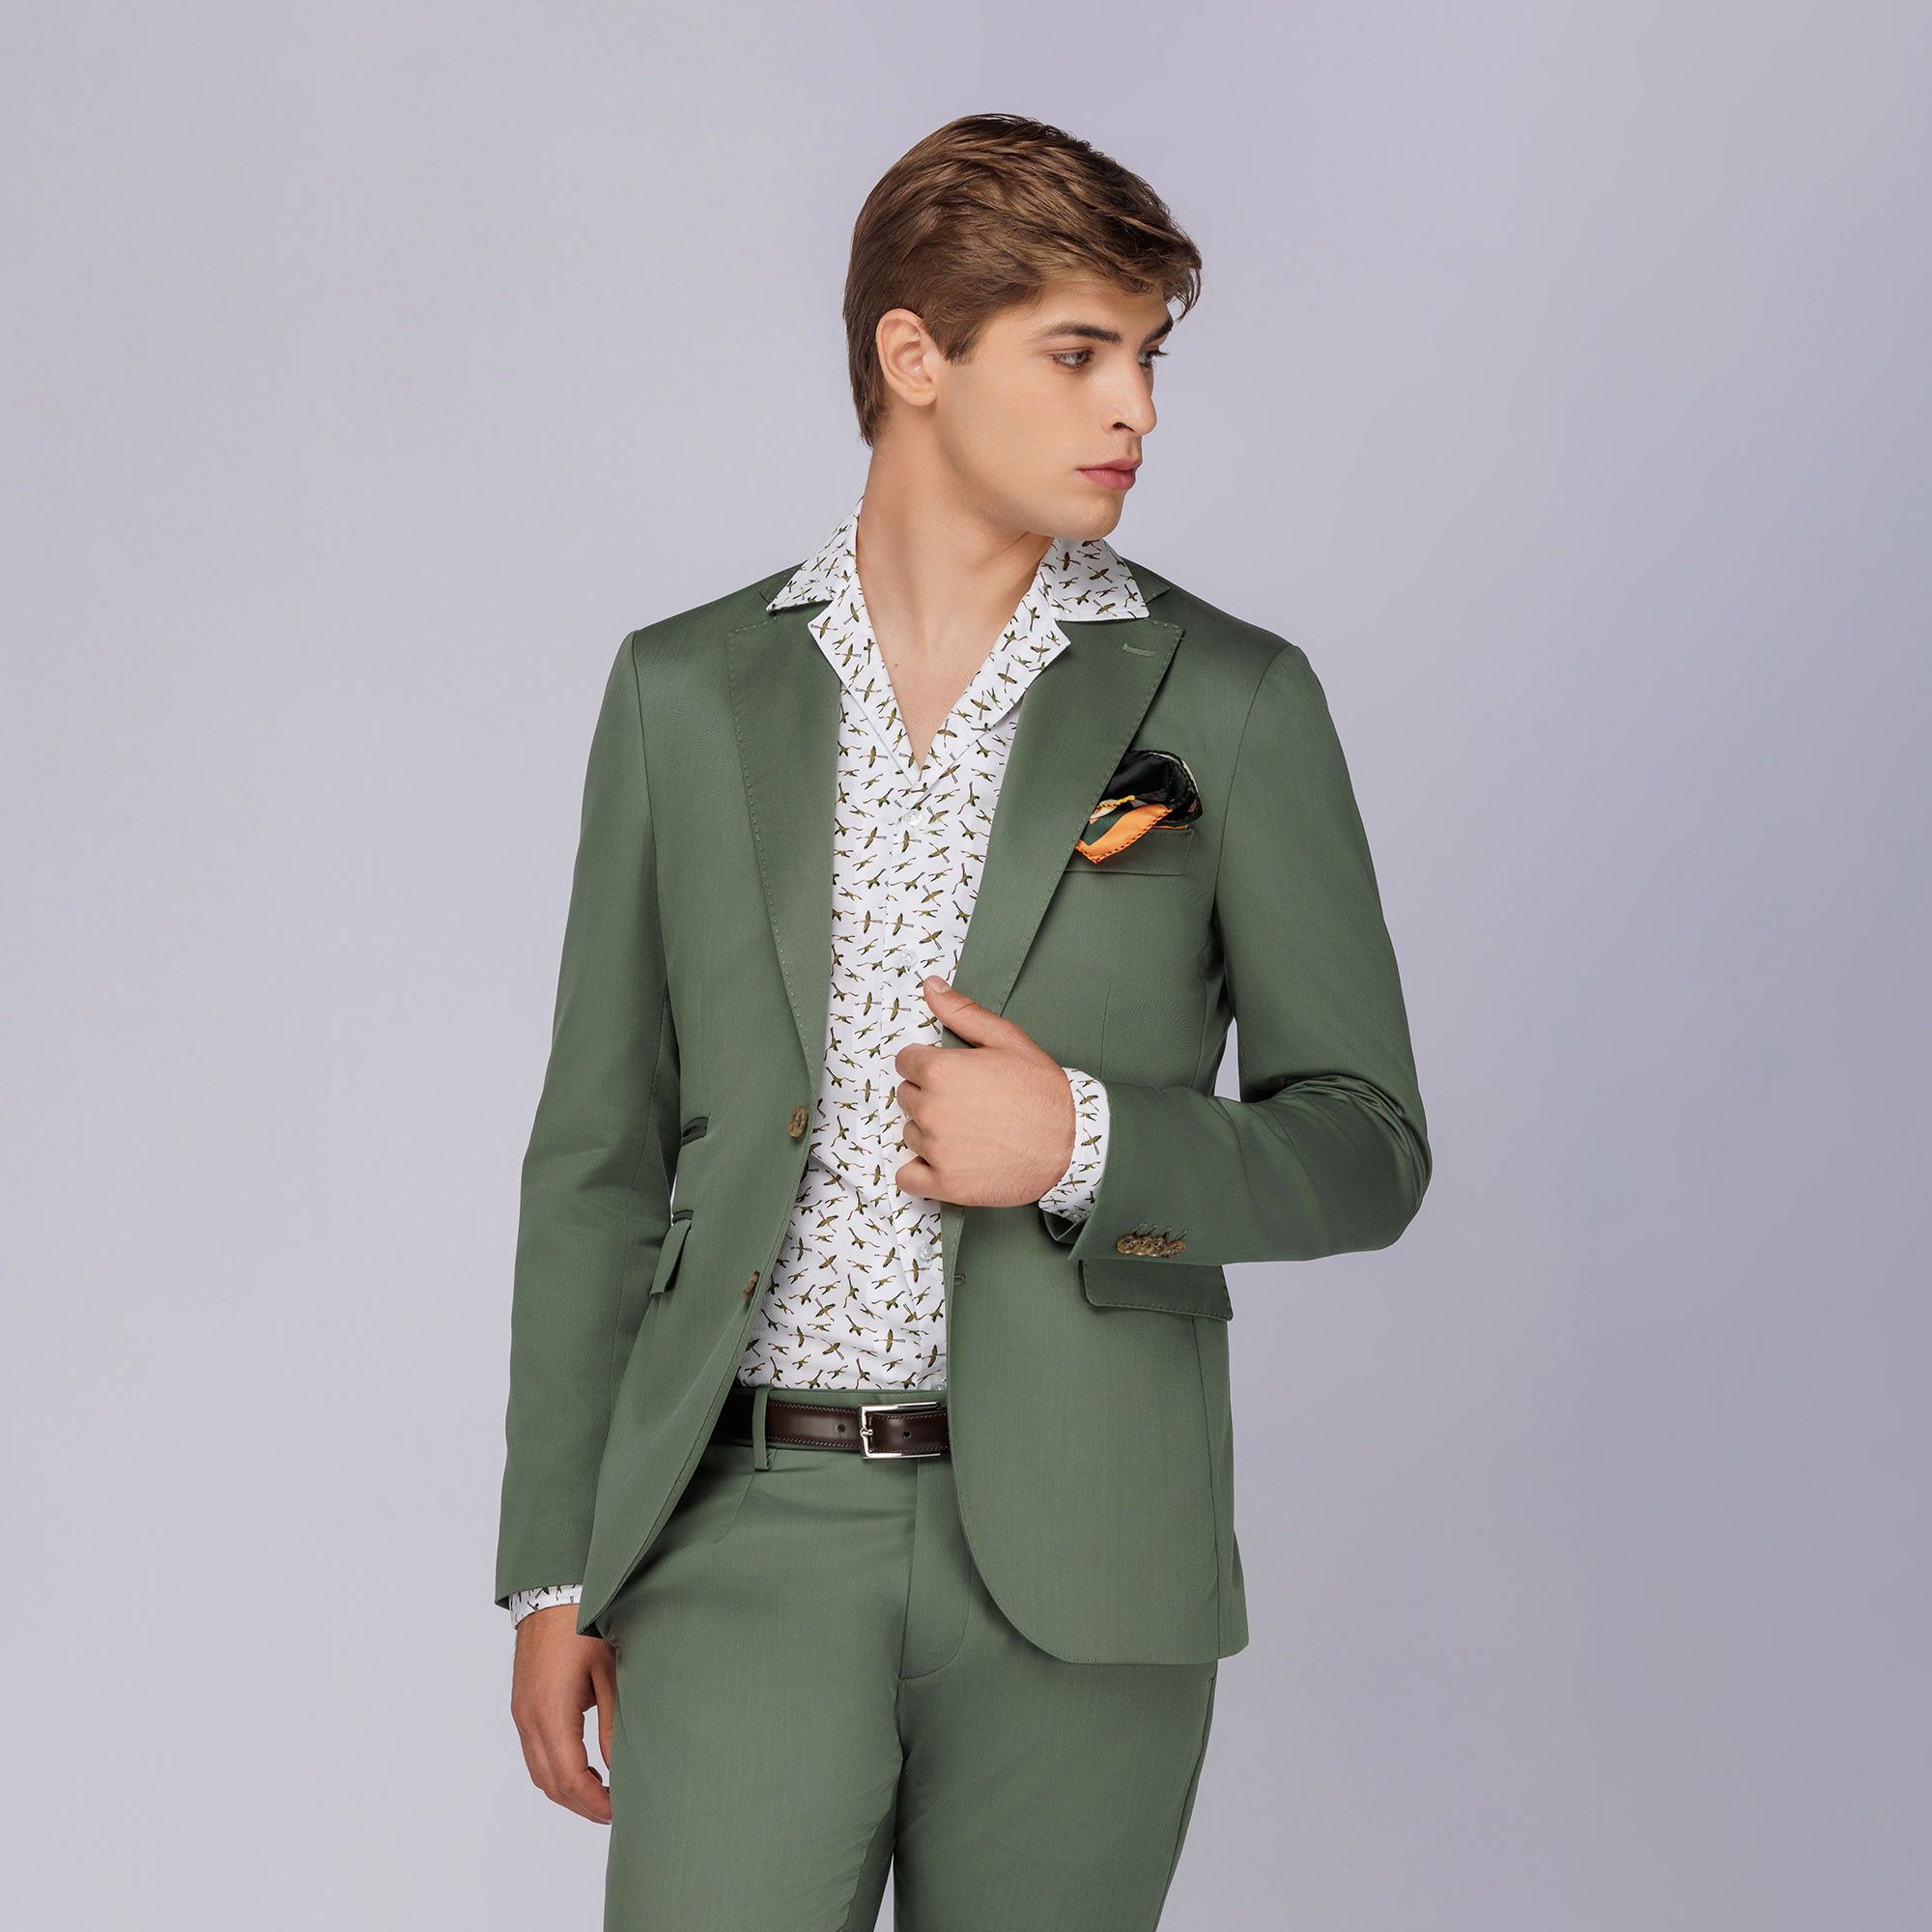 Men's Olive Green Suit